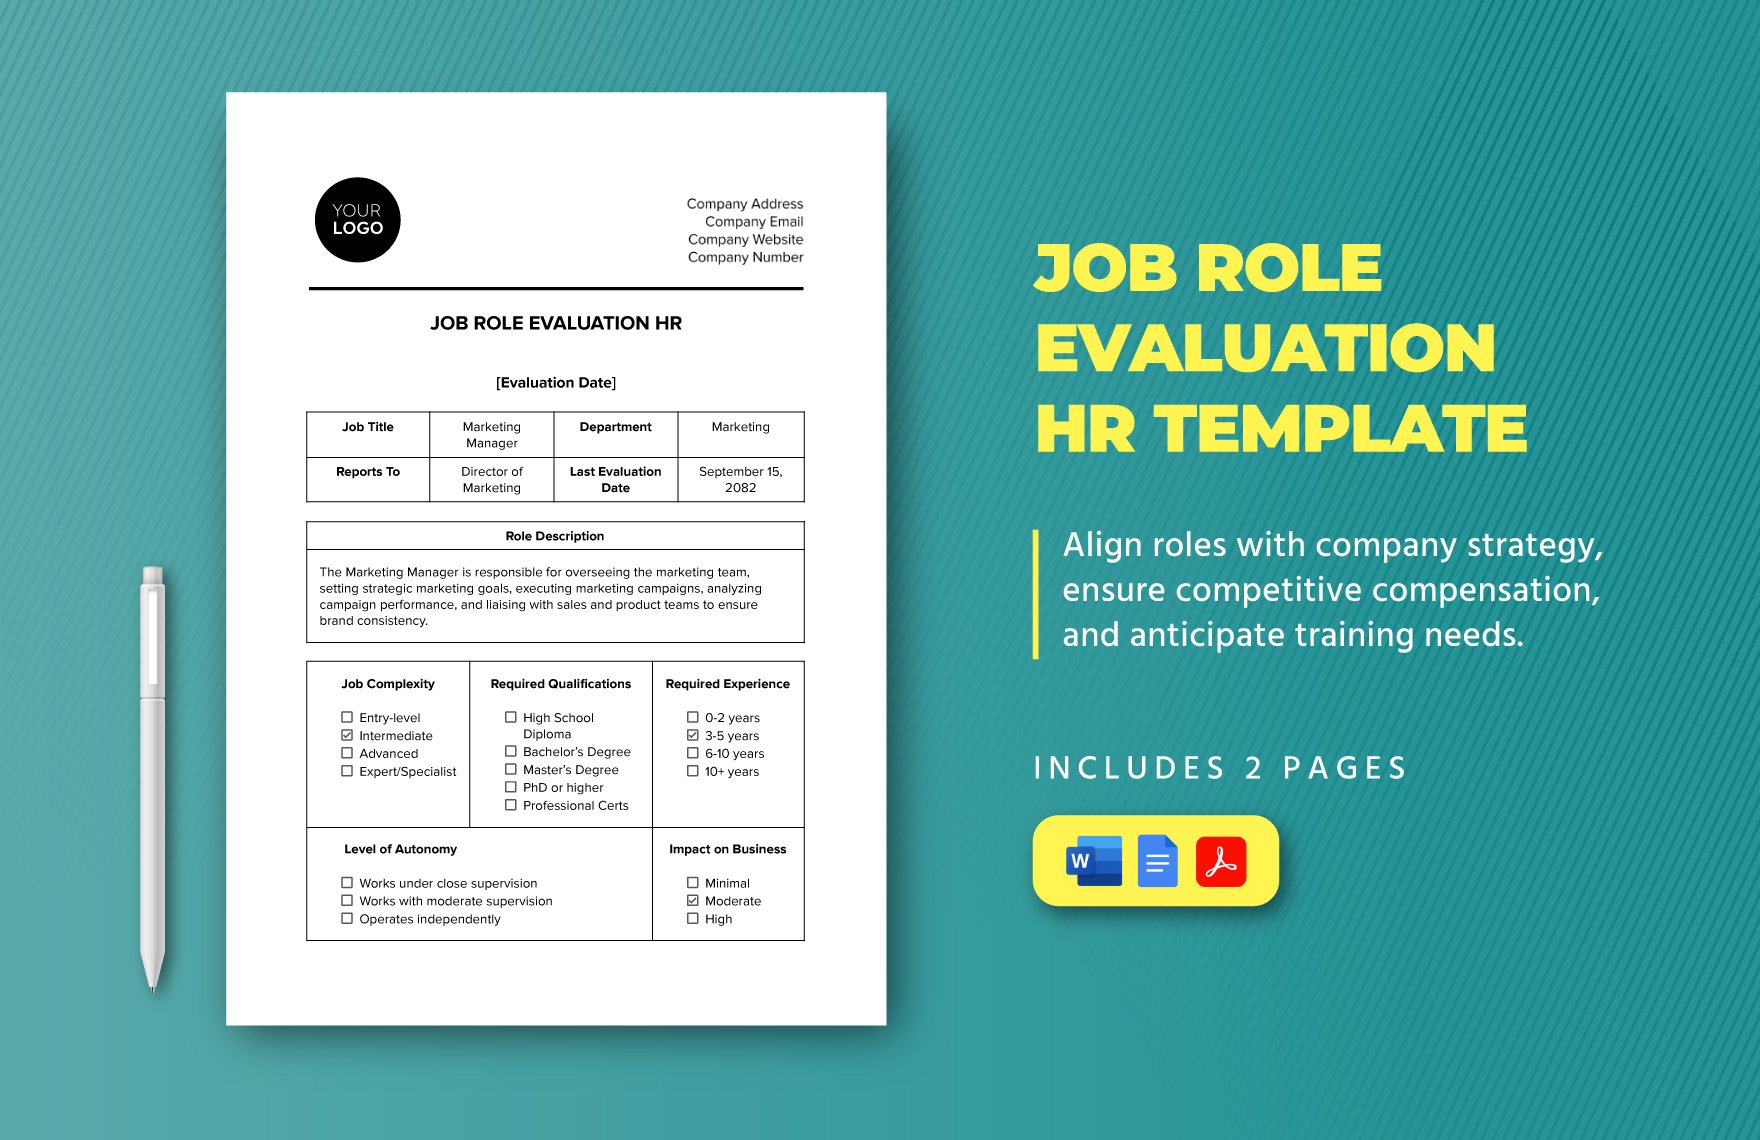 Job Role Evaluation HR Template